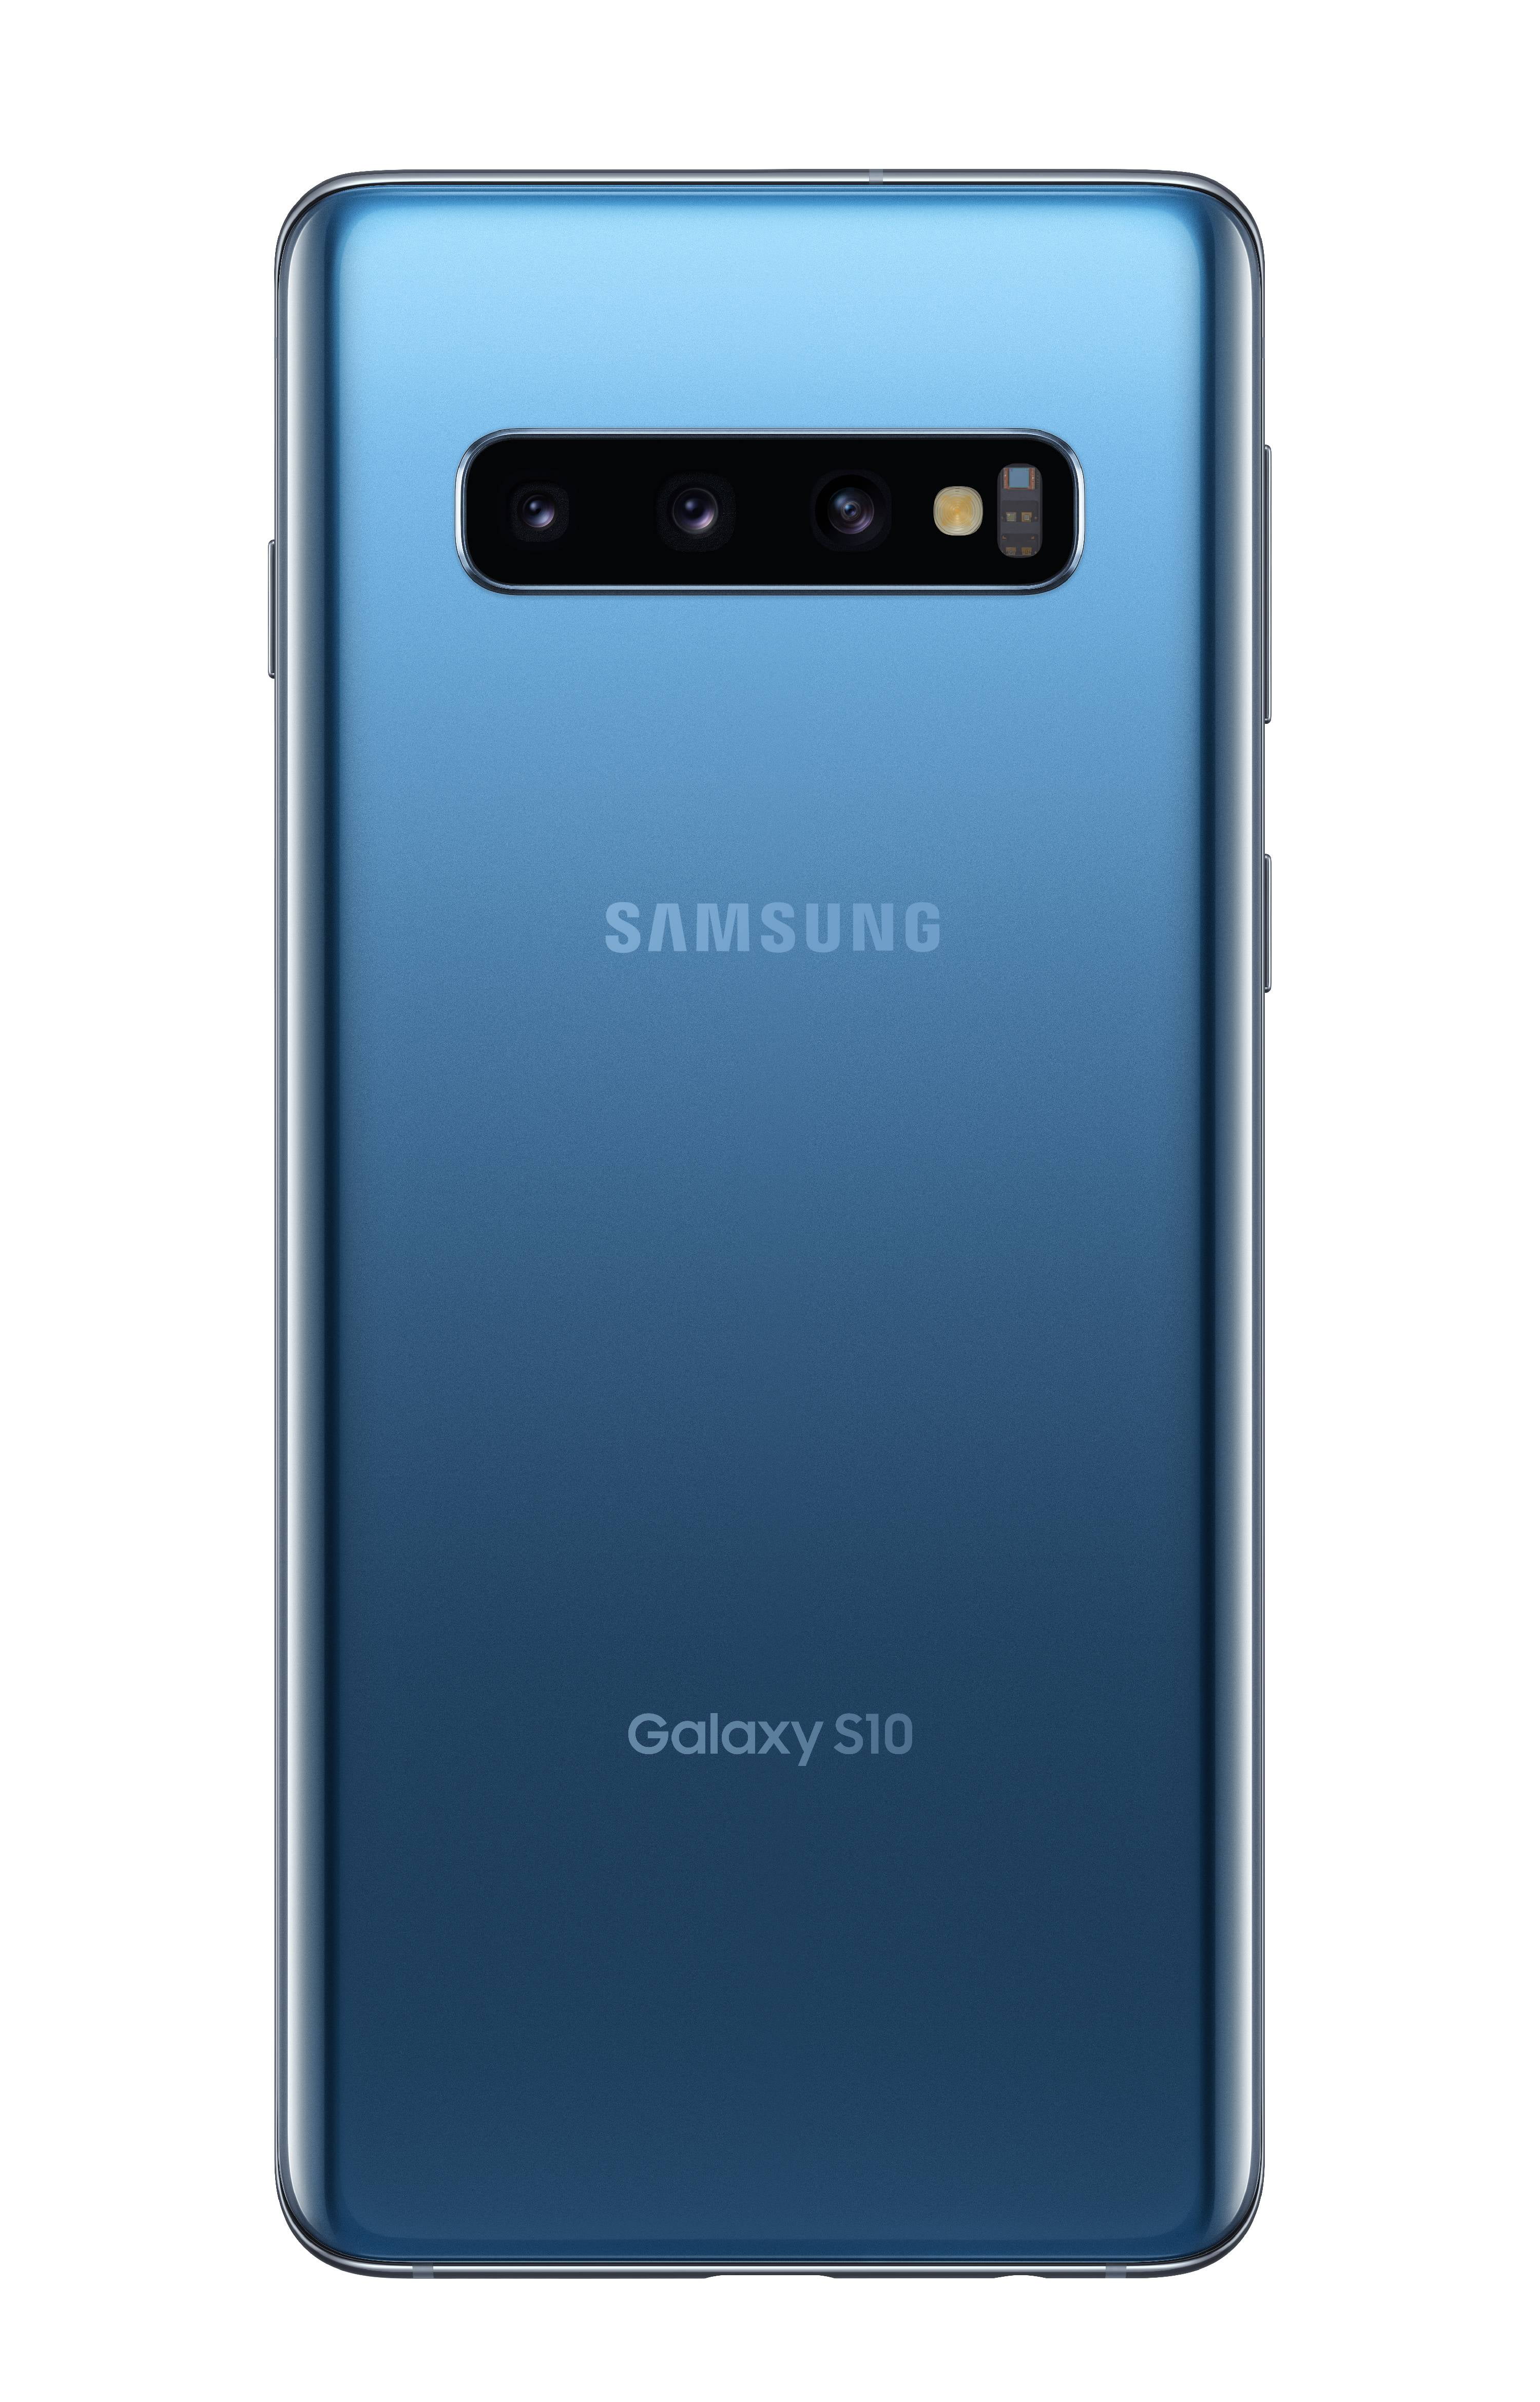 SAMSUNG Unlocked Galaxy S10, 128GB Black - Smartphone - Walmart.com